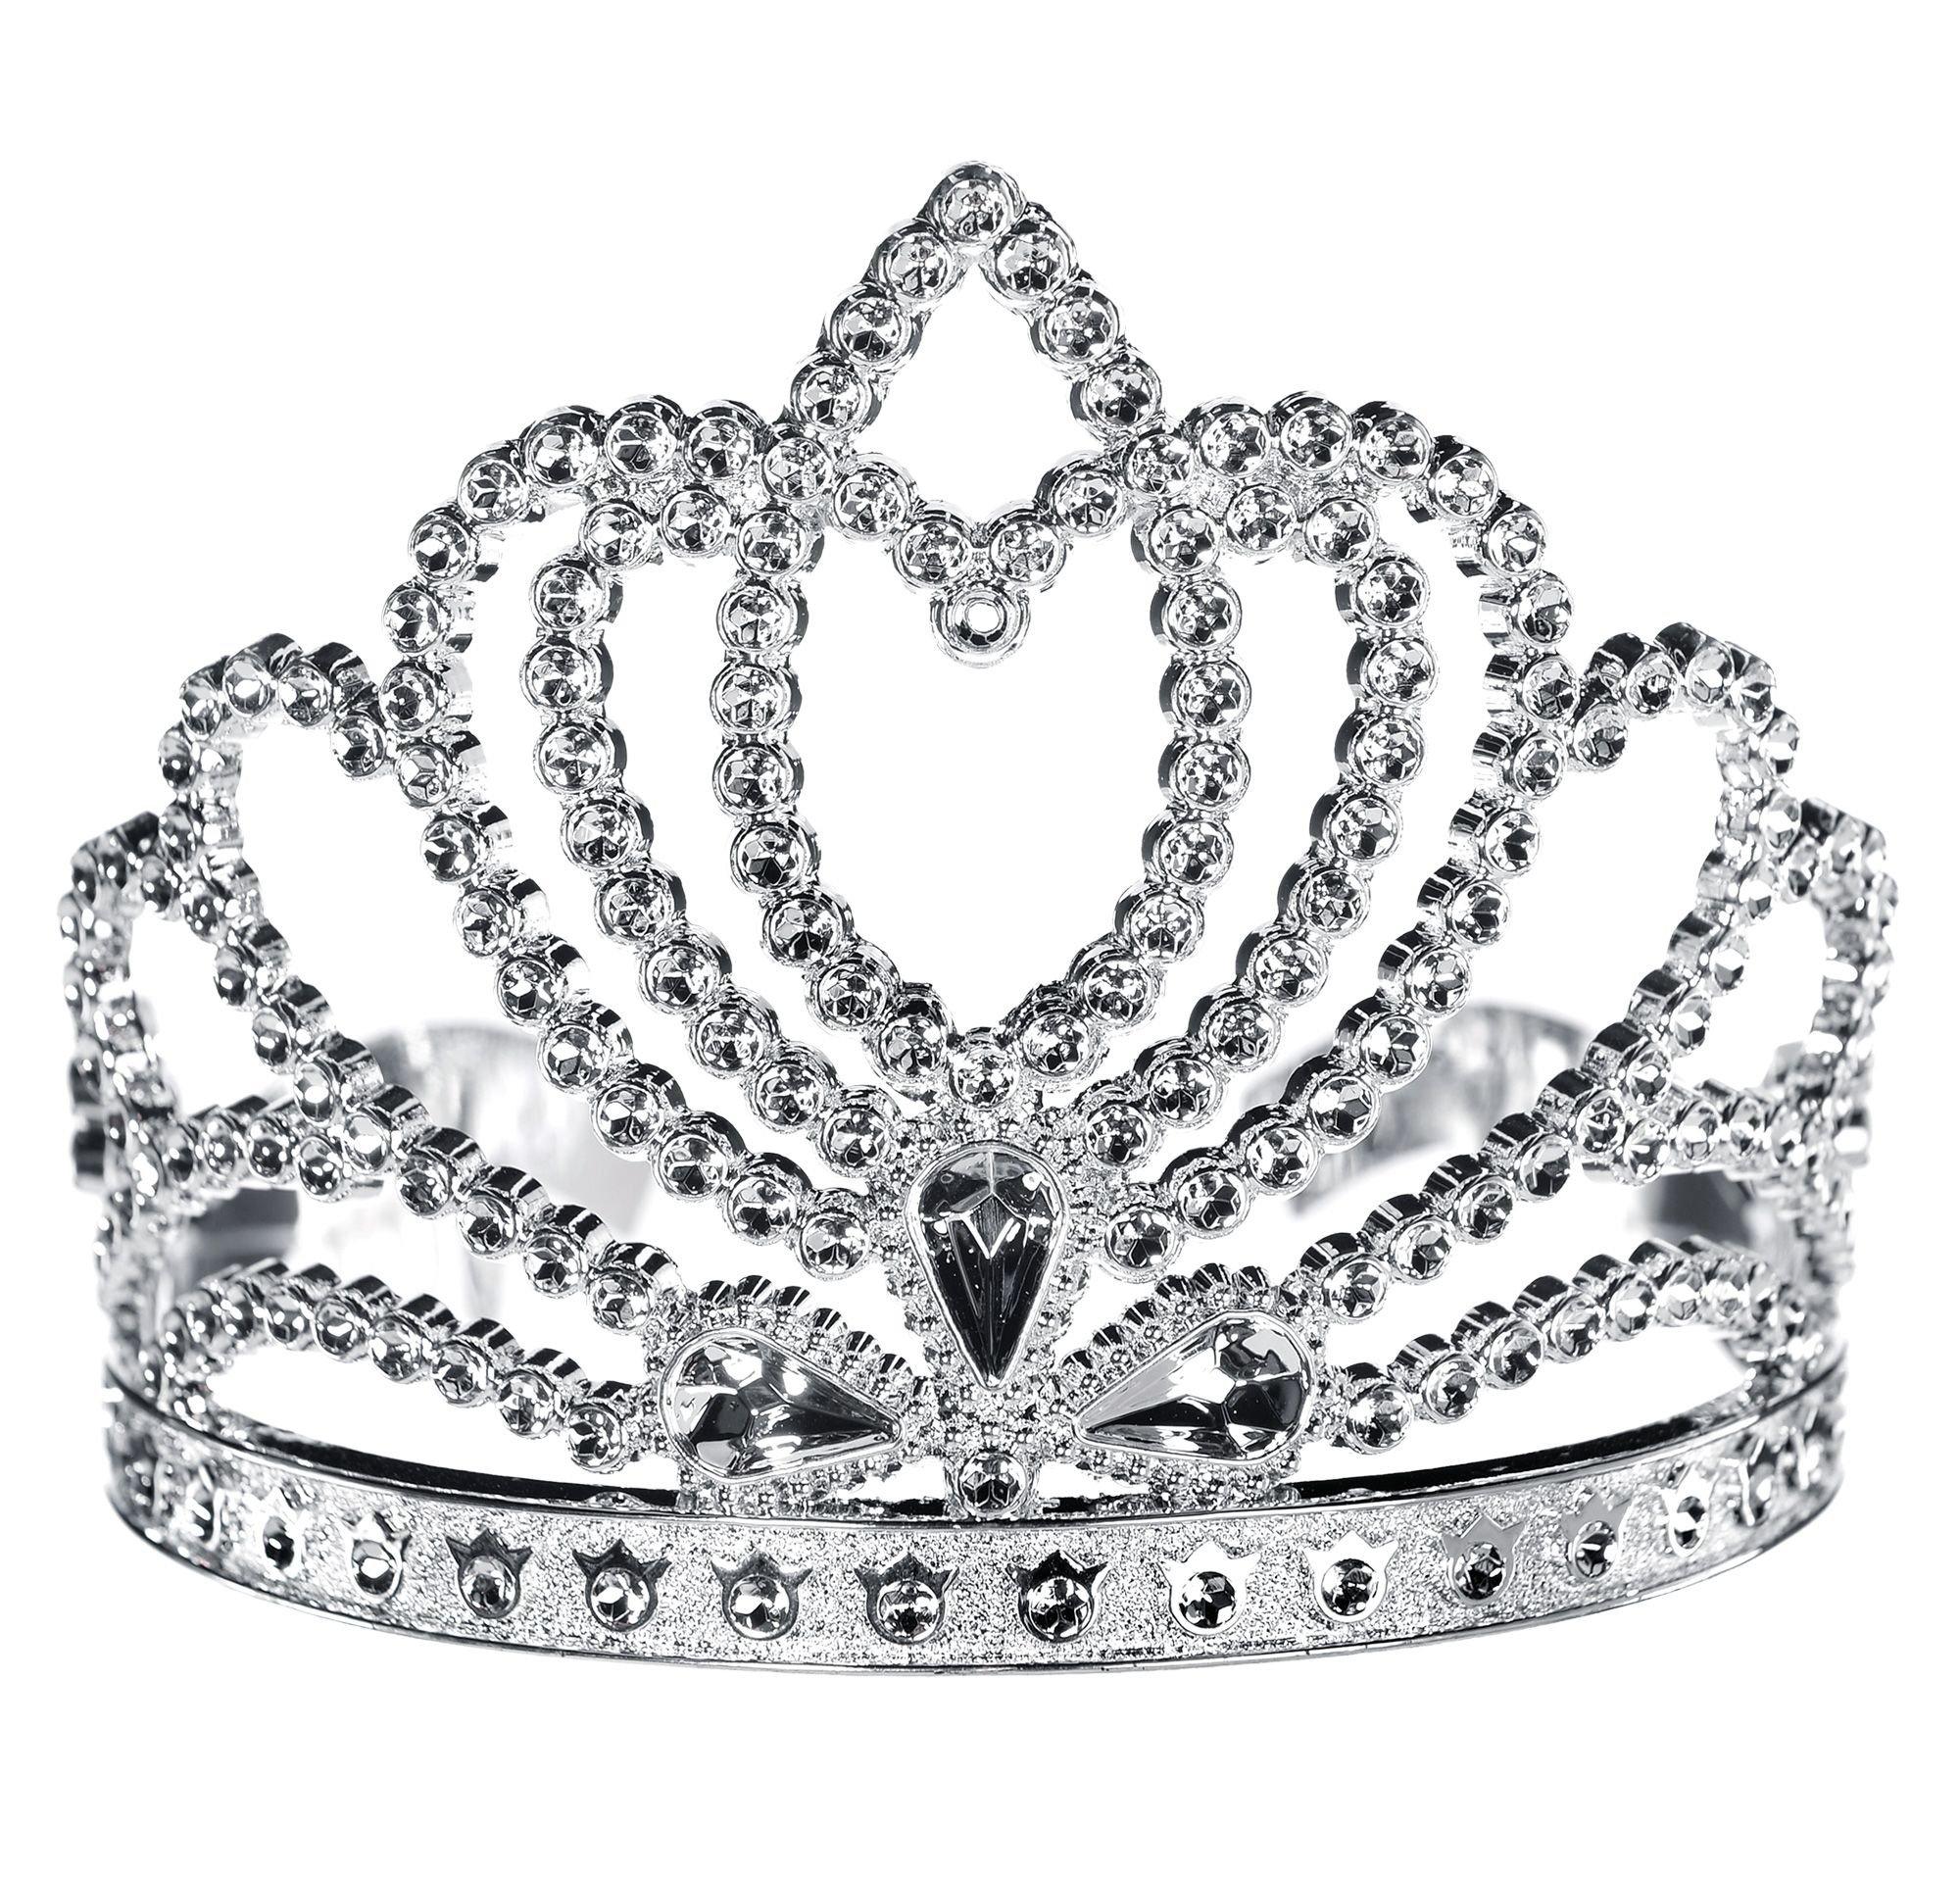 DIY: Mini Crown for Princesses - Girls' Accessory 